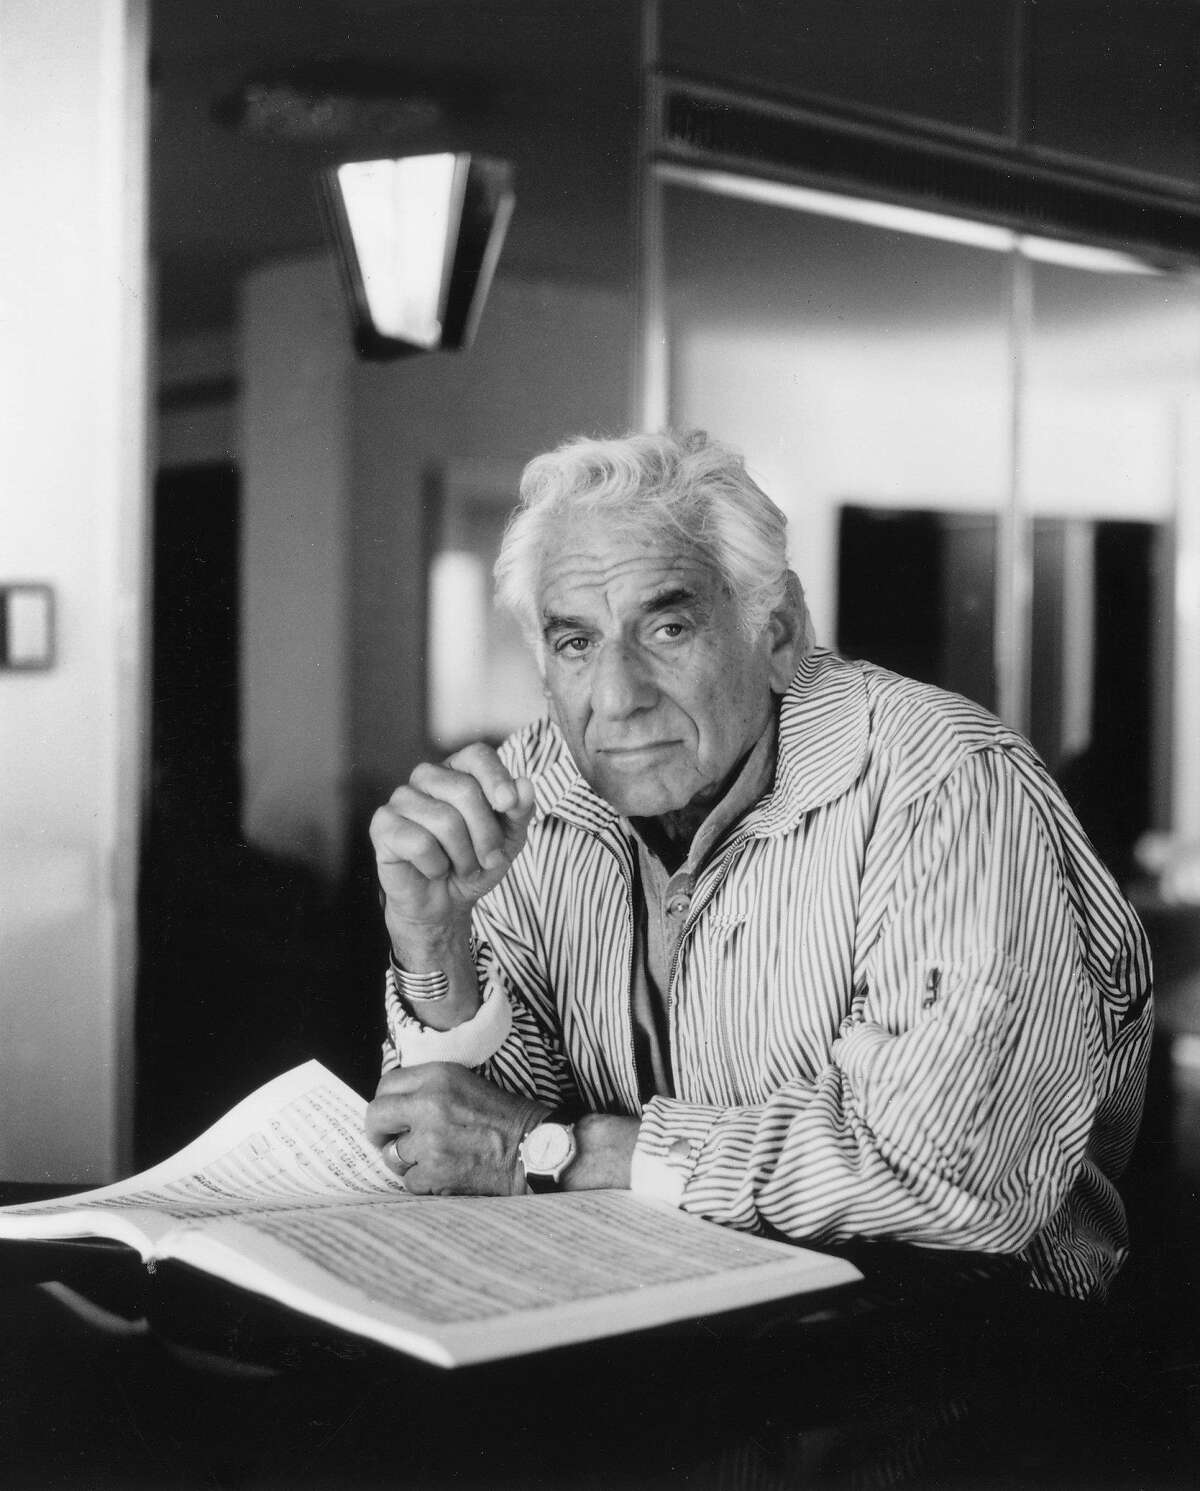 For his centennial year, celebrating Leonard Bernstein’s tireless vitality